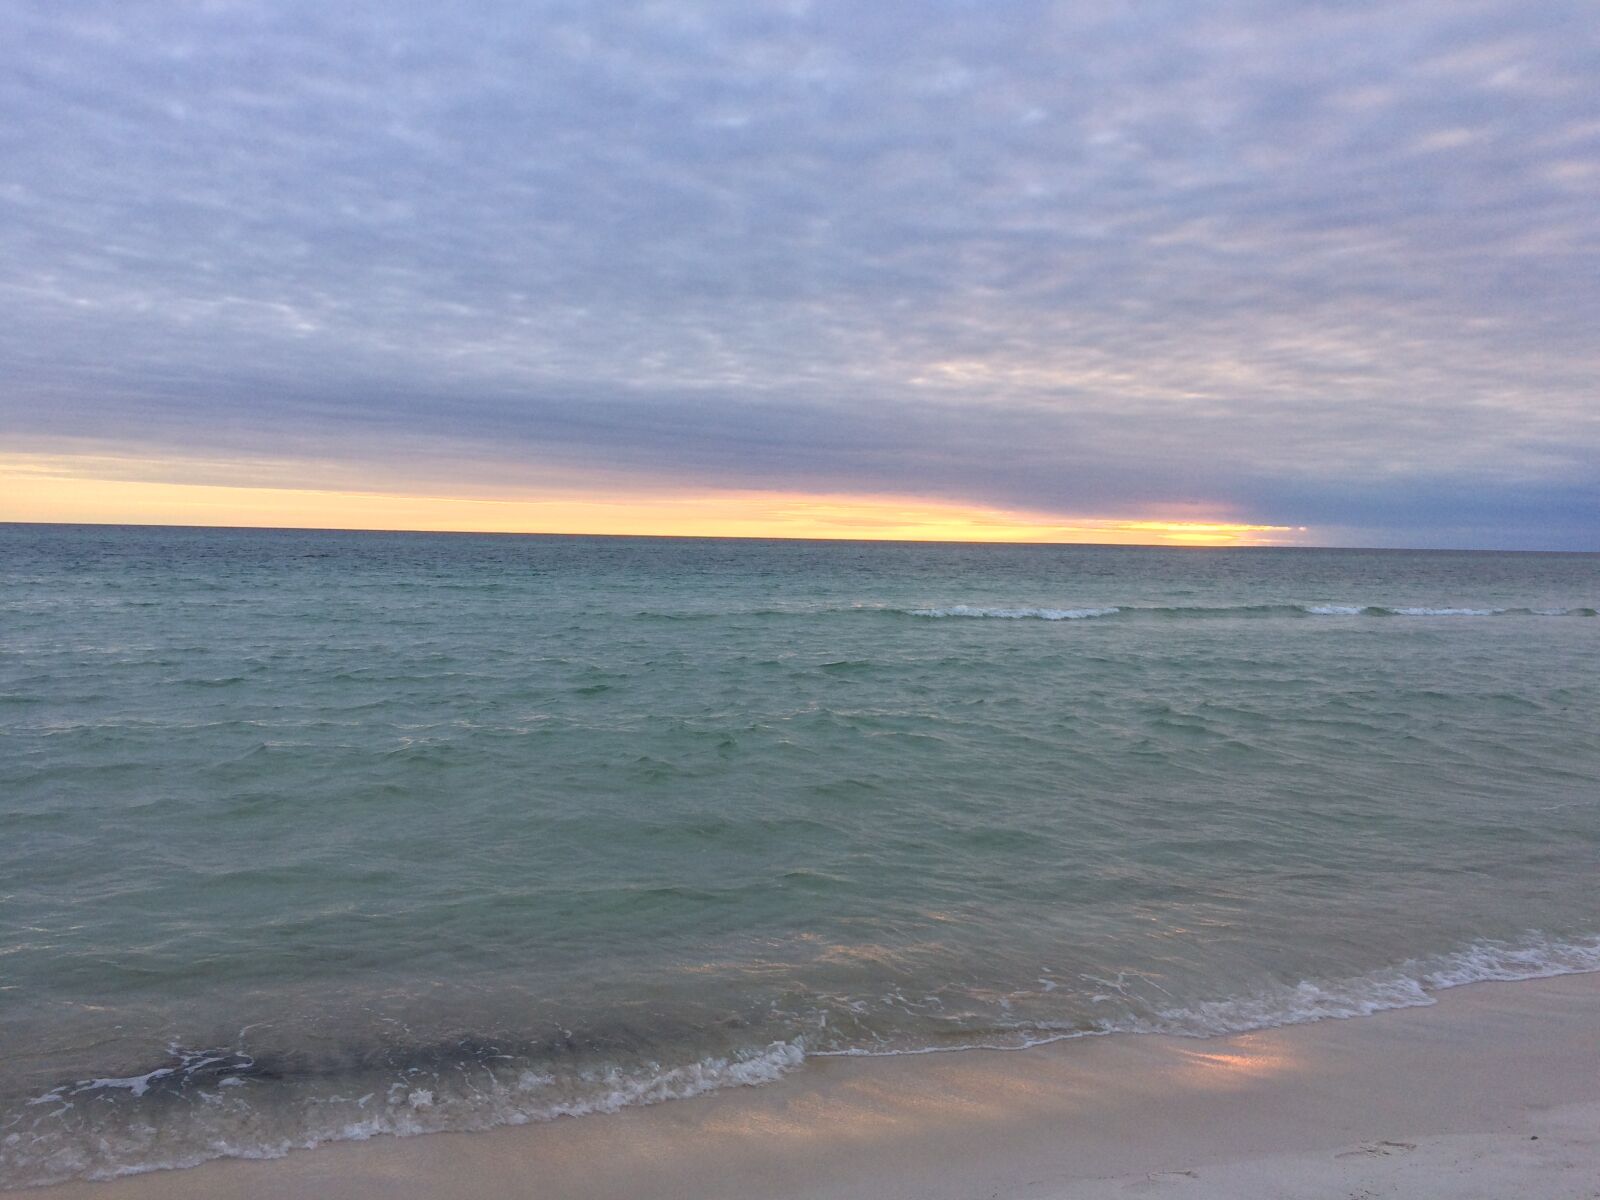 iPhone 5s back camera 4.15mm f/2.2 sample photo. Beach, sunset, ocean photography